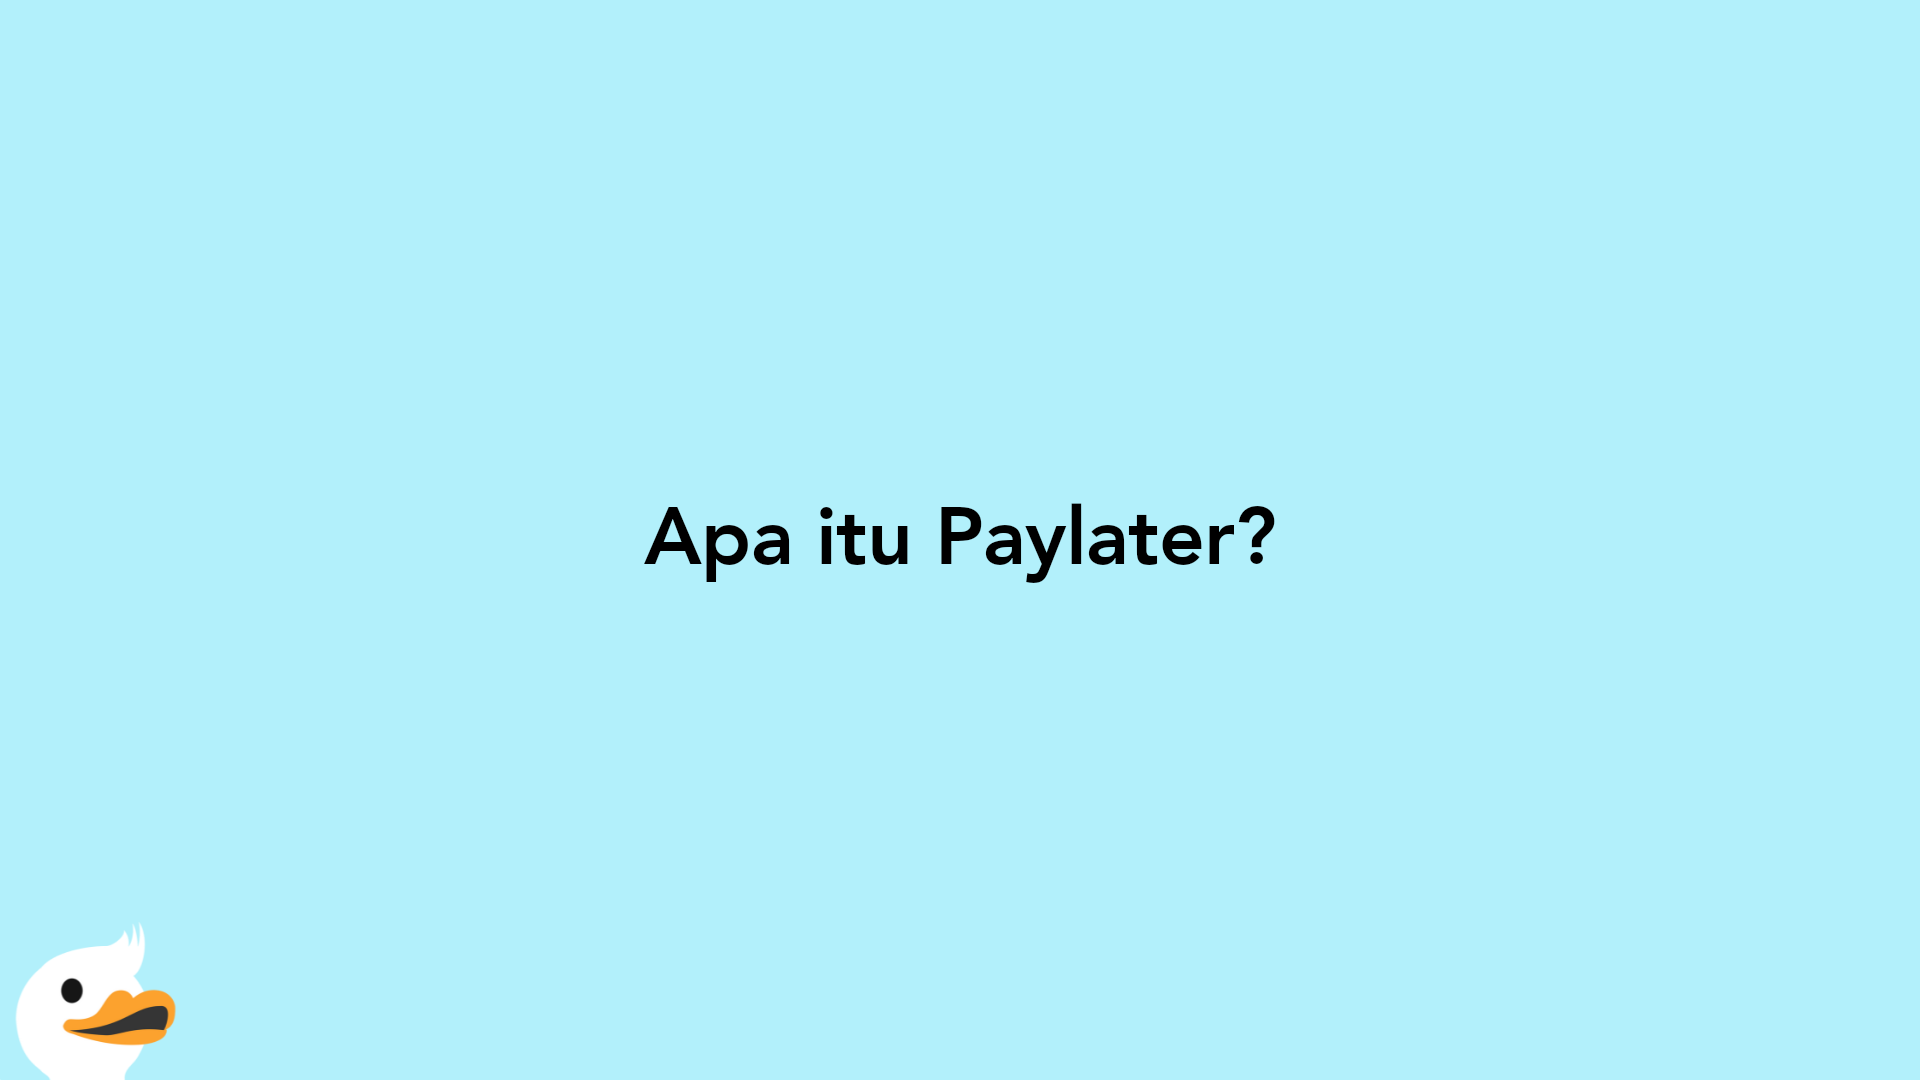 Apa itu Paylater?